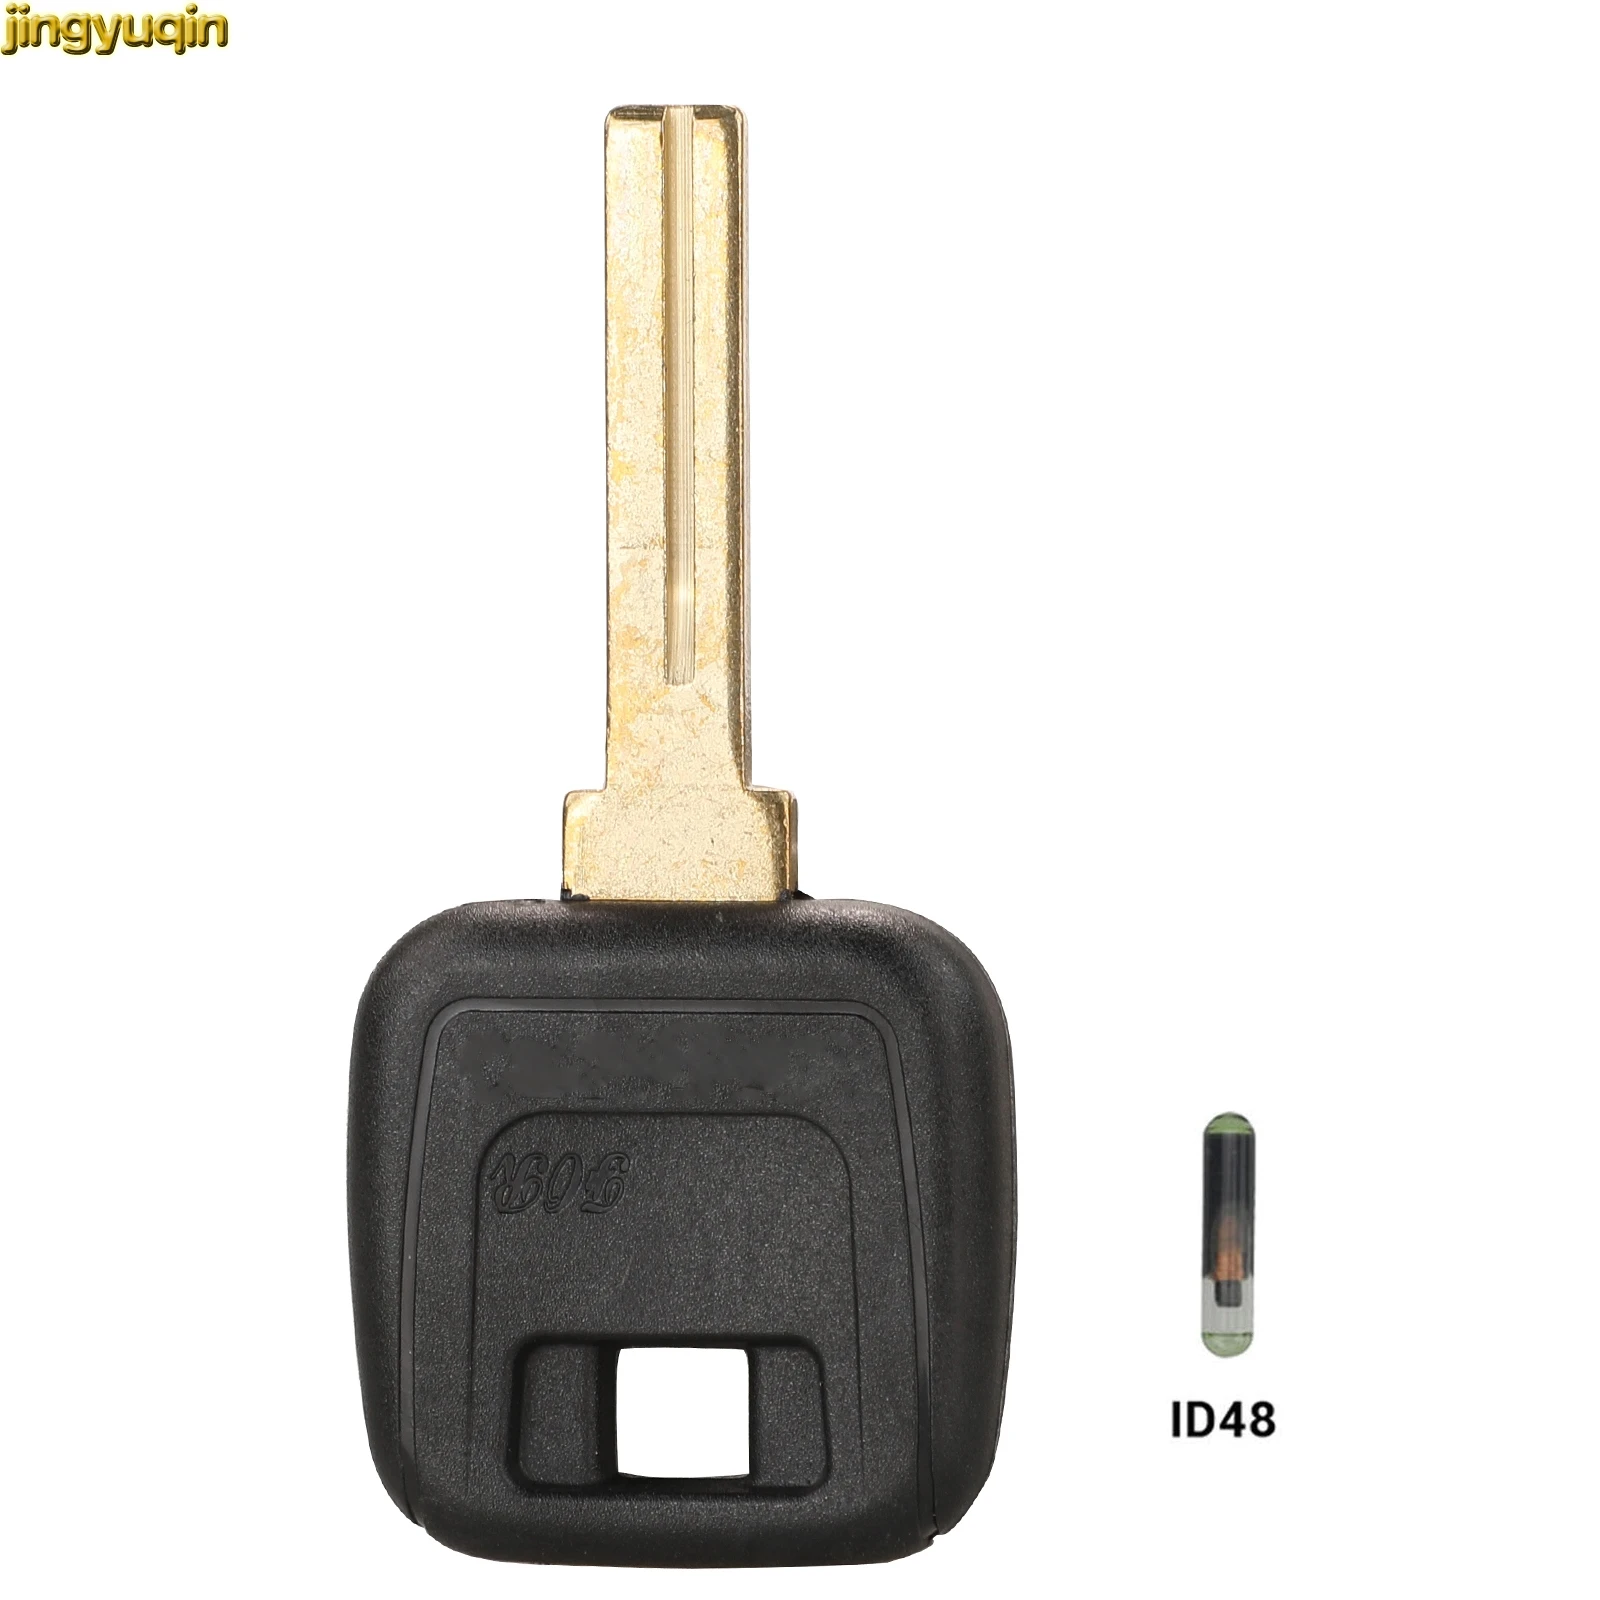 

Jingyuqin Remote Car Key Fob Shell With ID48 Transponder Chip For Volvo S40 V40 D30 S60 S80 XC90 XC60 Uncut NE66 Blade